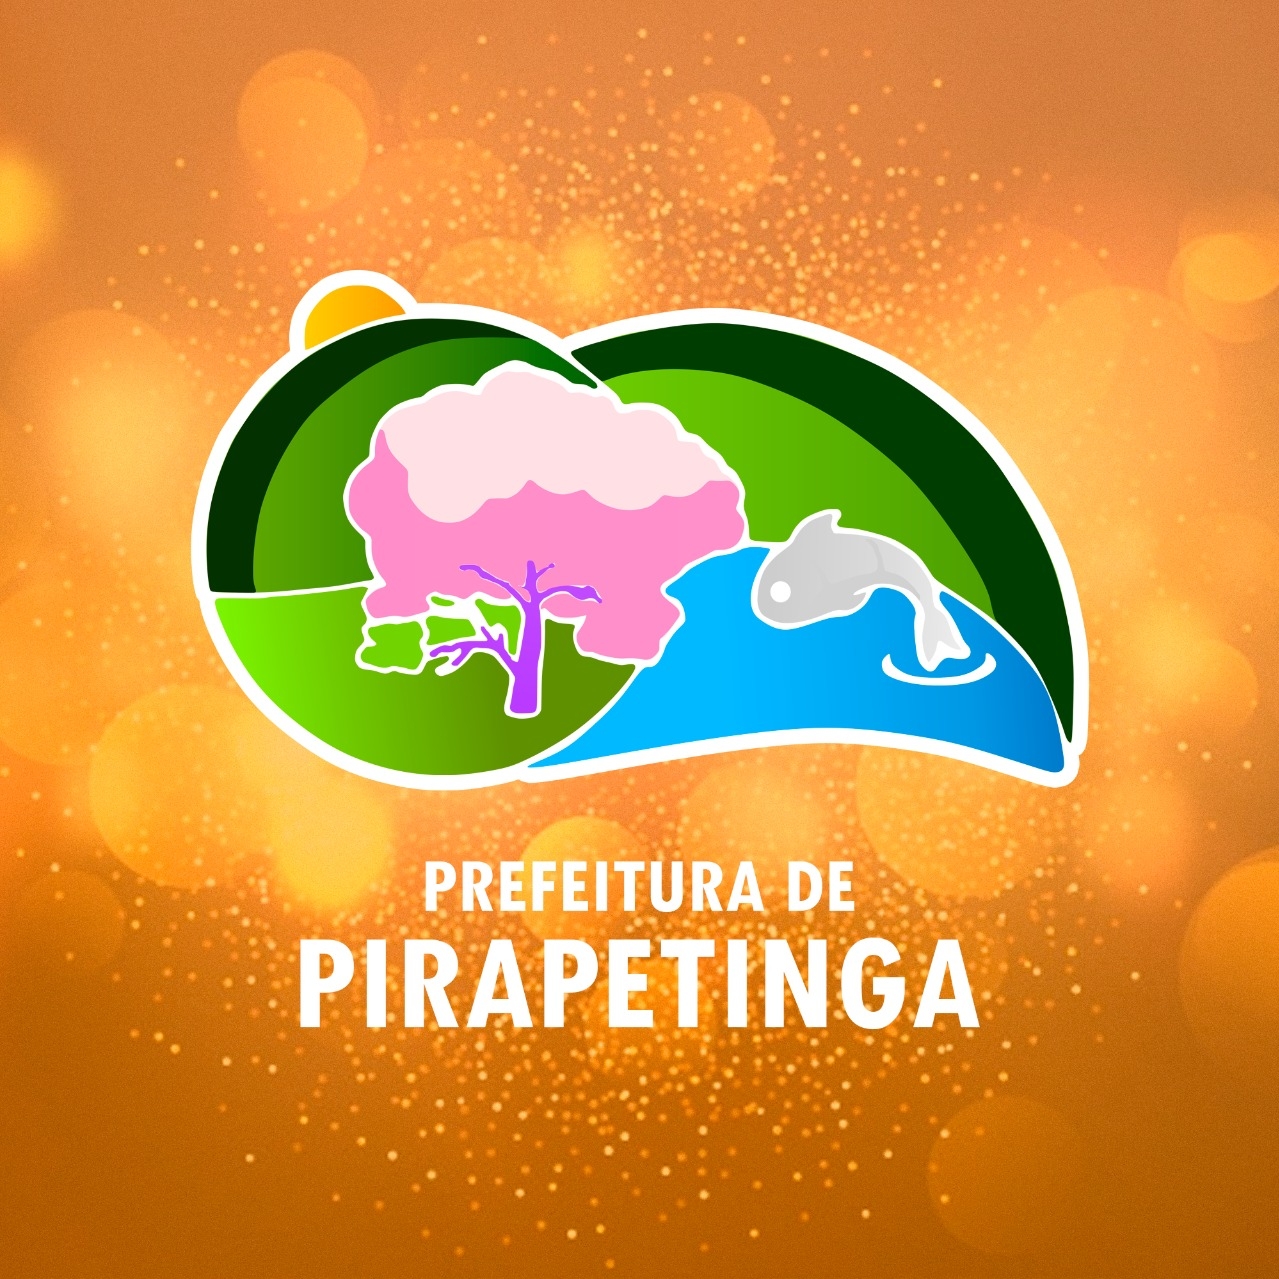 Prefeitura de Pirapetinga